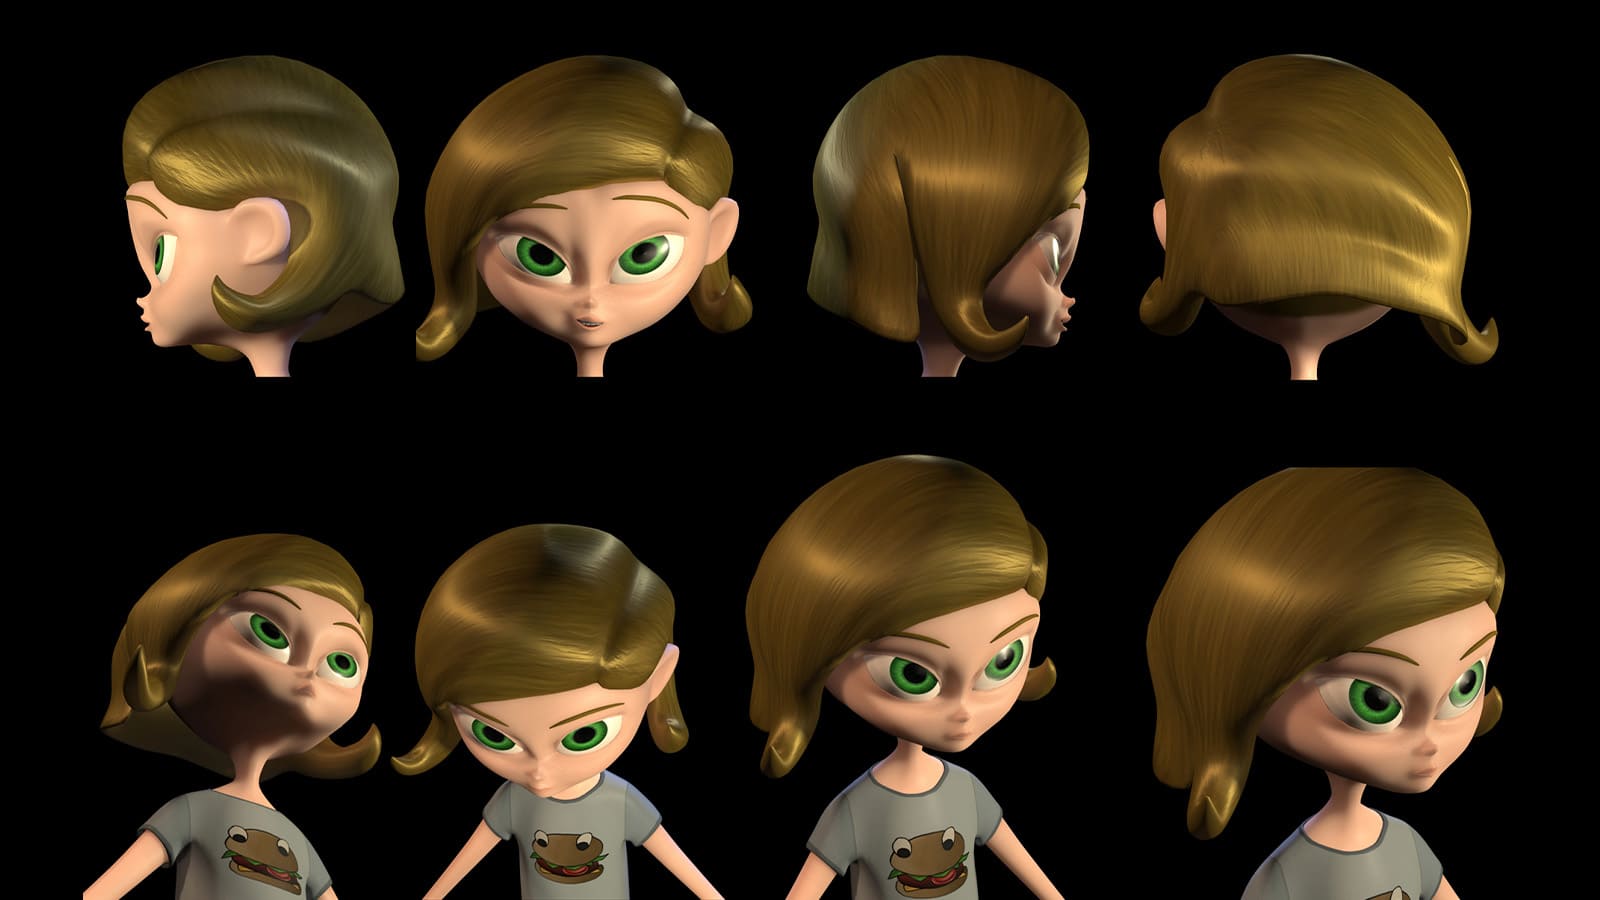 Main character's 3D designed head turnaround.